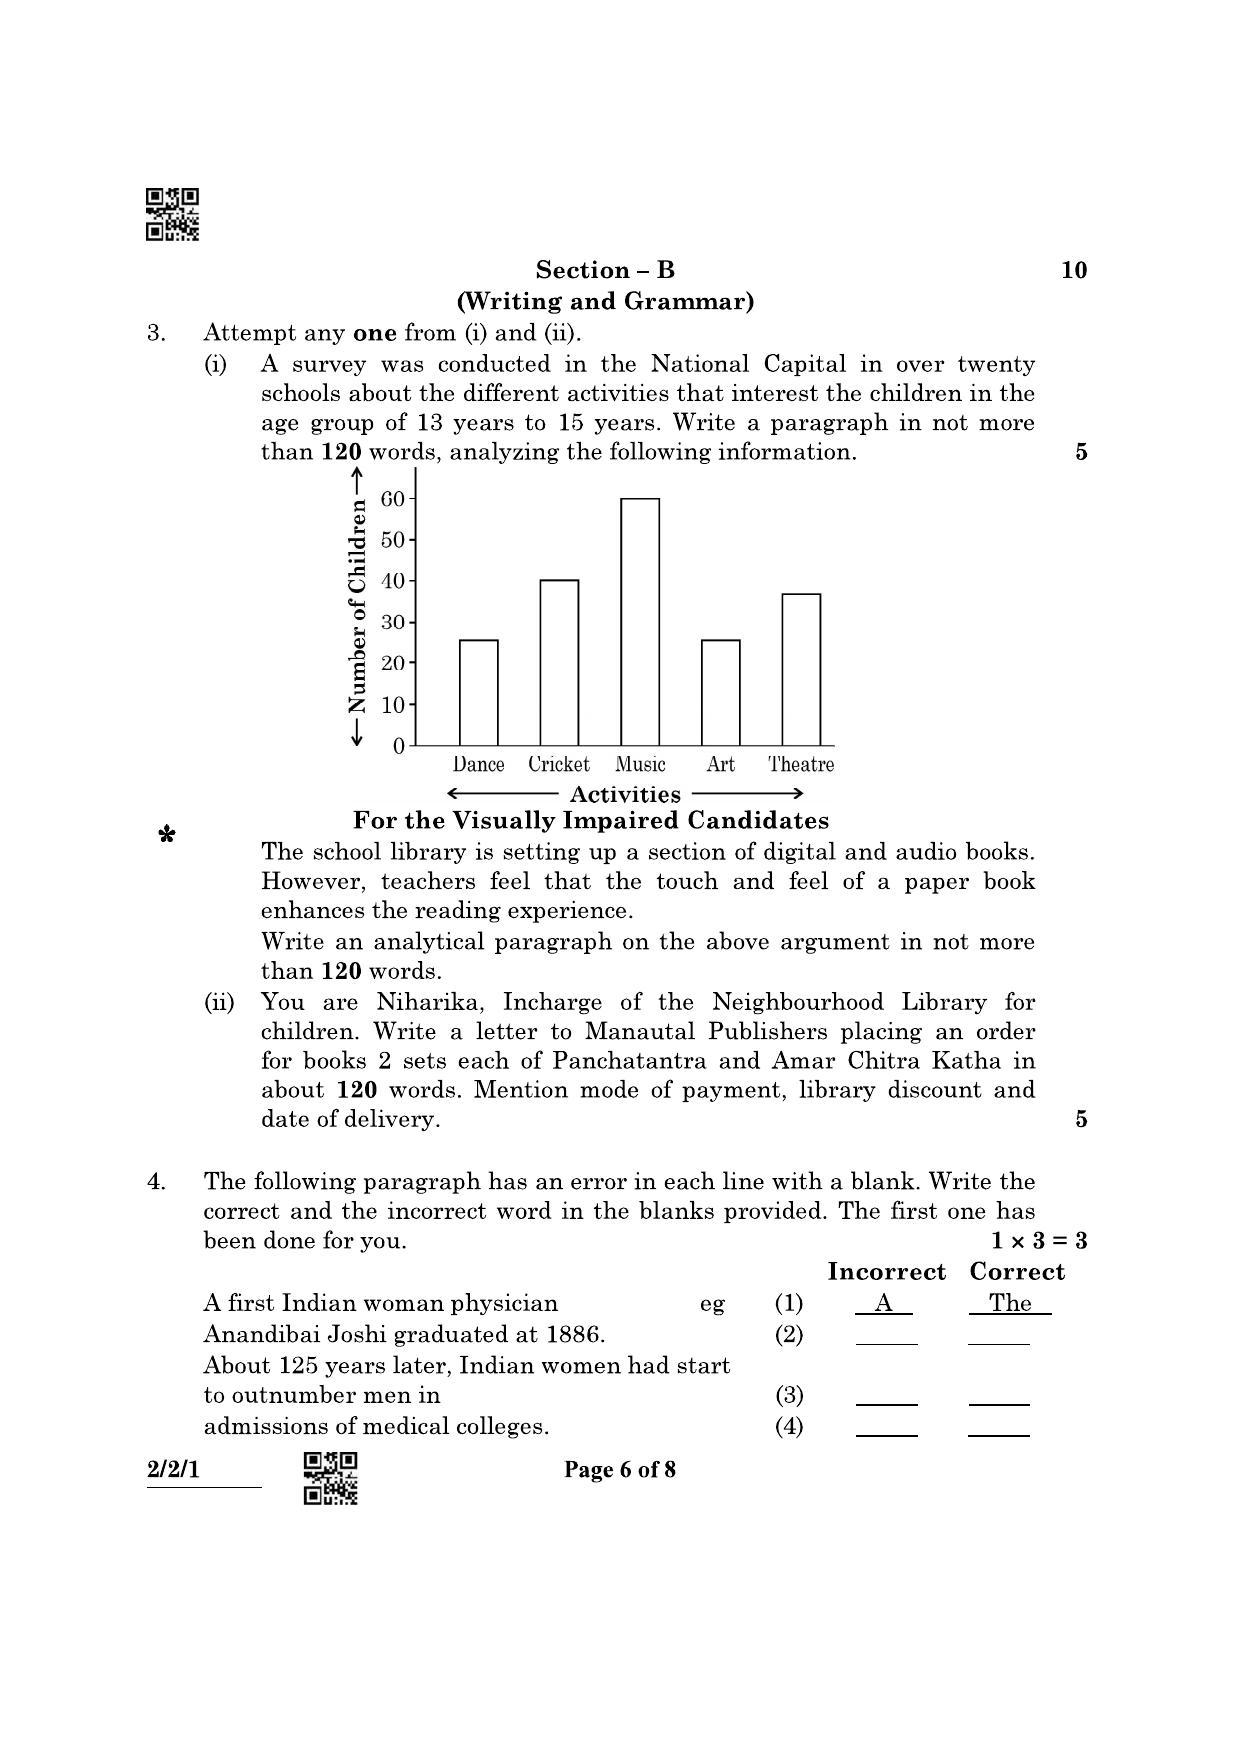 CBSE Class 10 2-2-1 (English L & L) 2022 Question Paper - Page 6